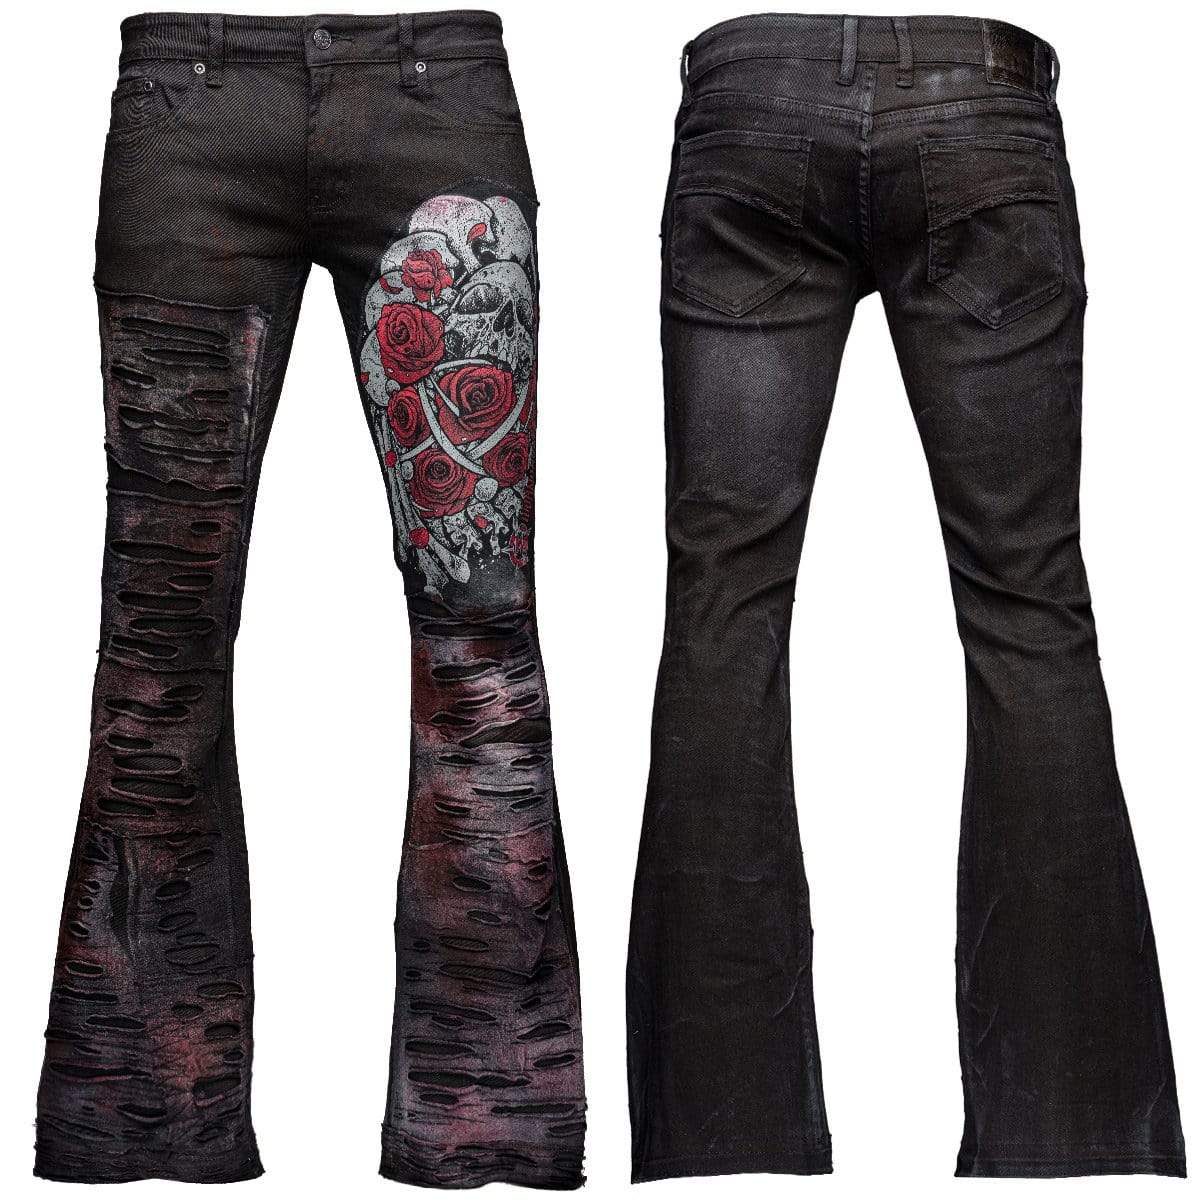 Wornstar Custom Jeans - Scorpion Purple